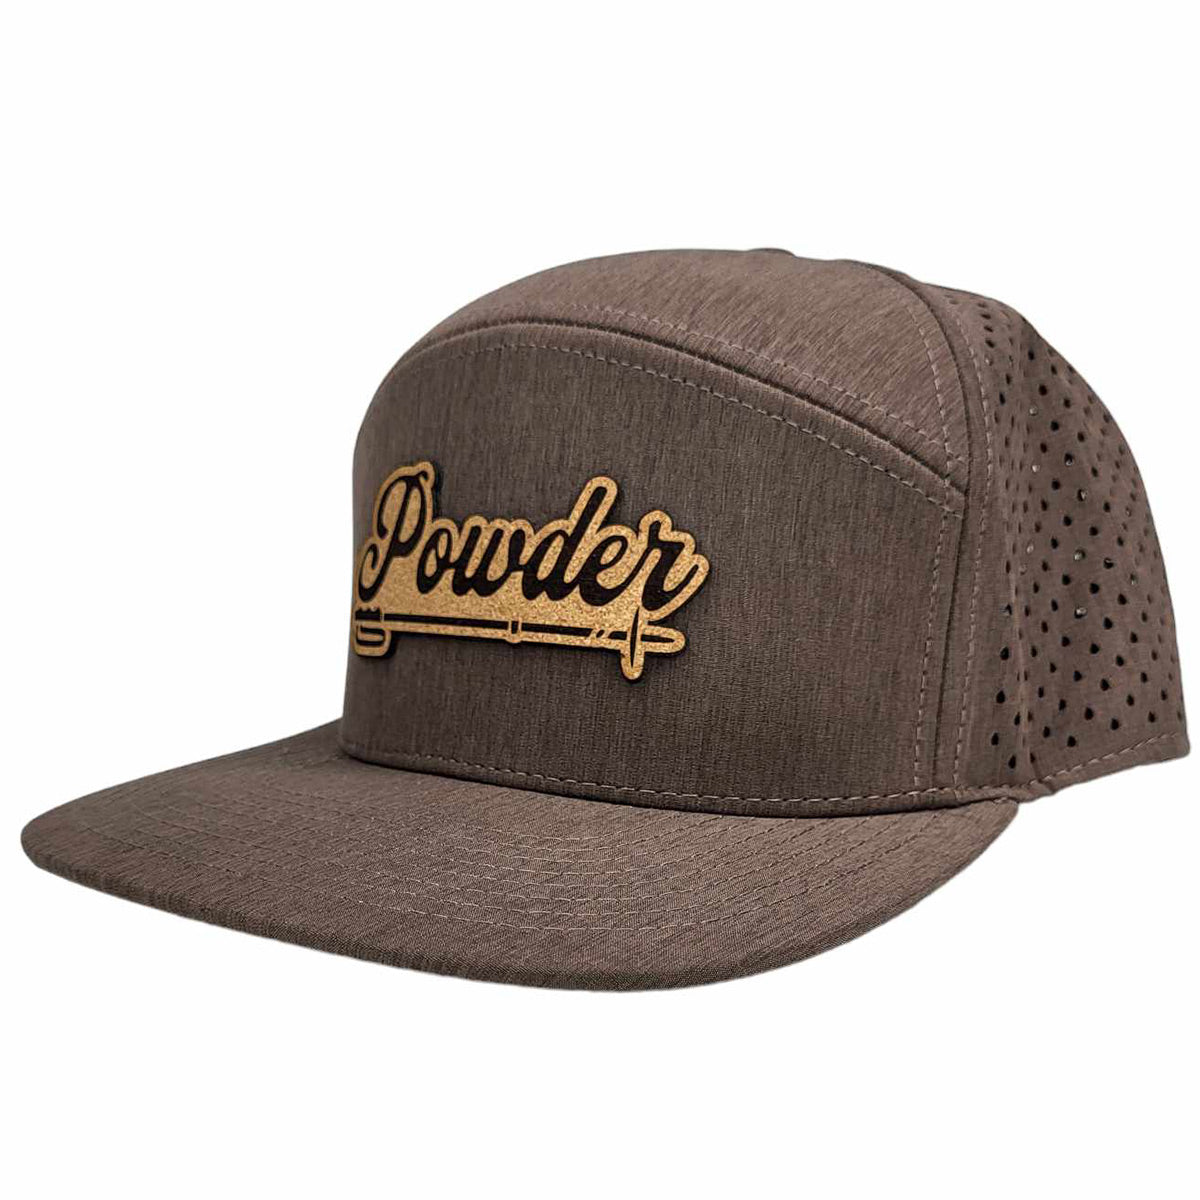 Powder Hat